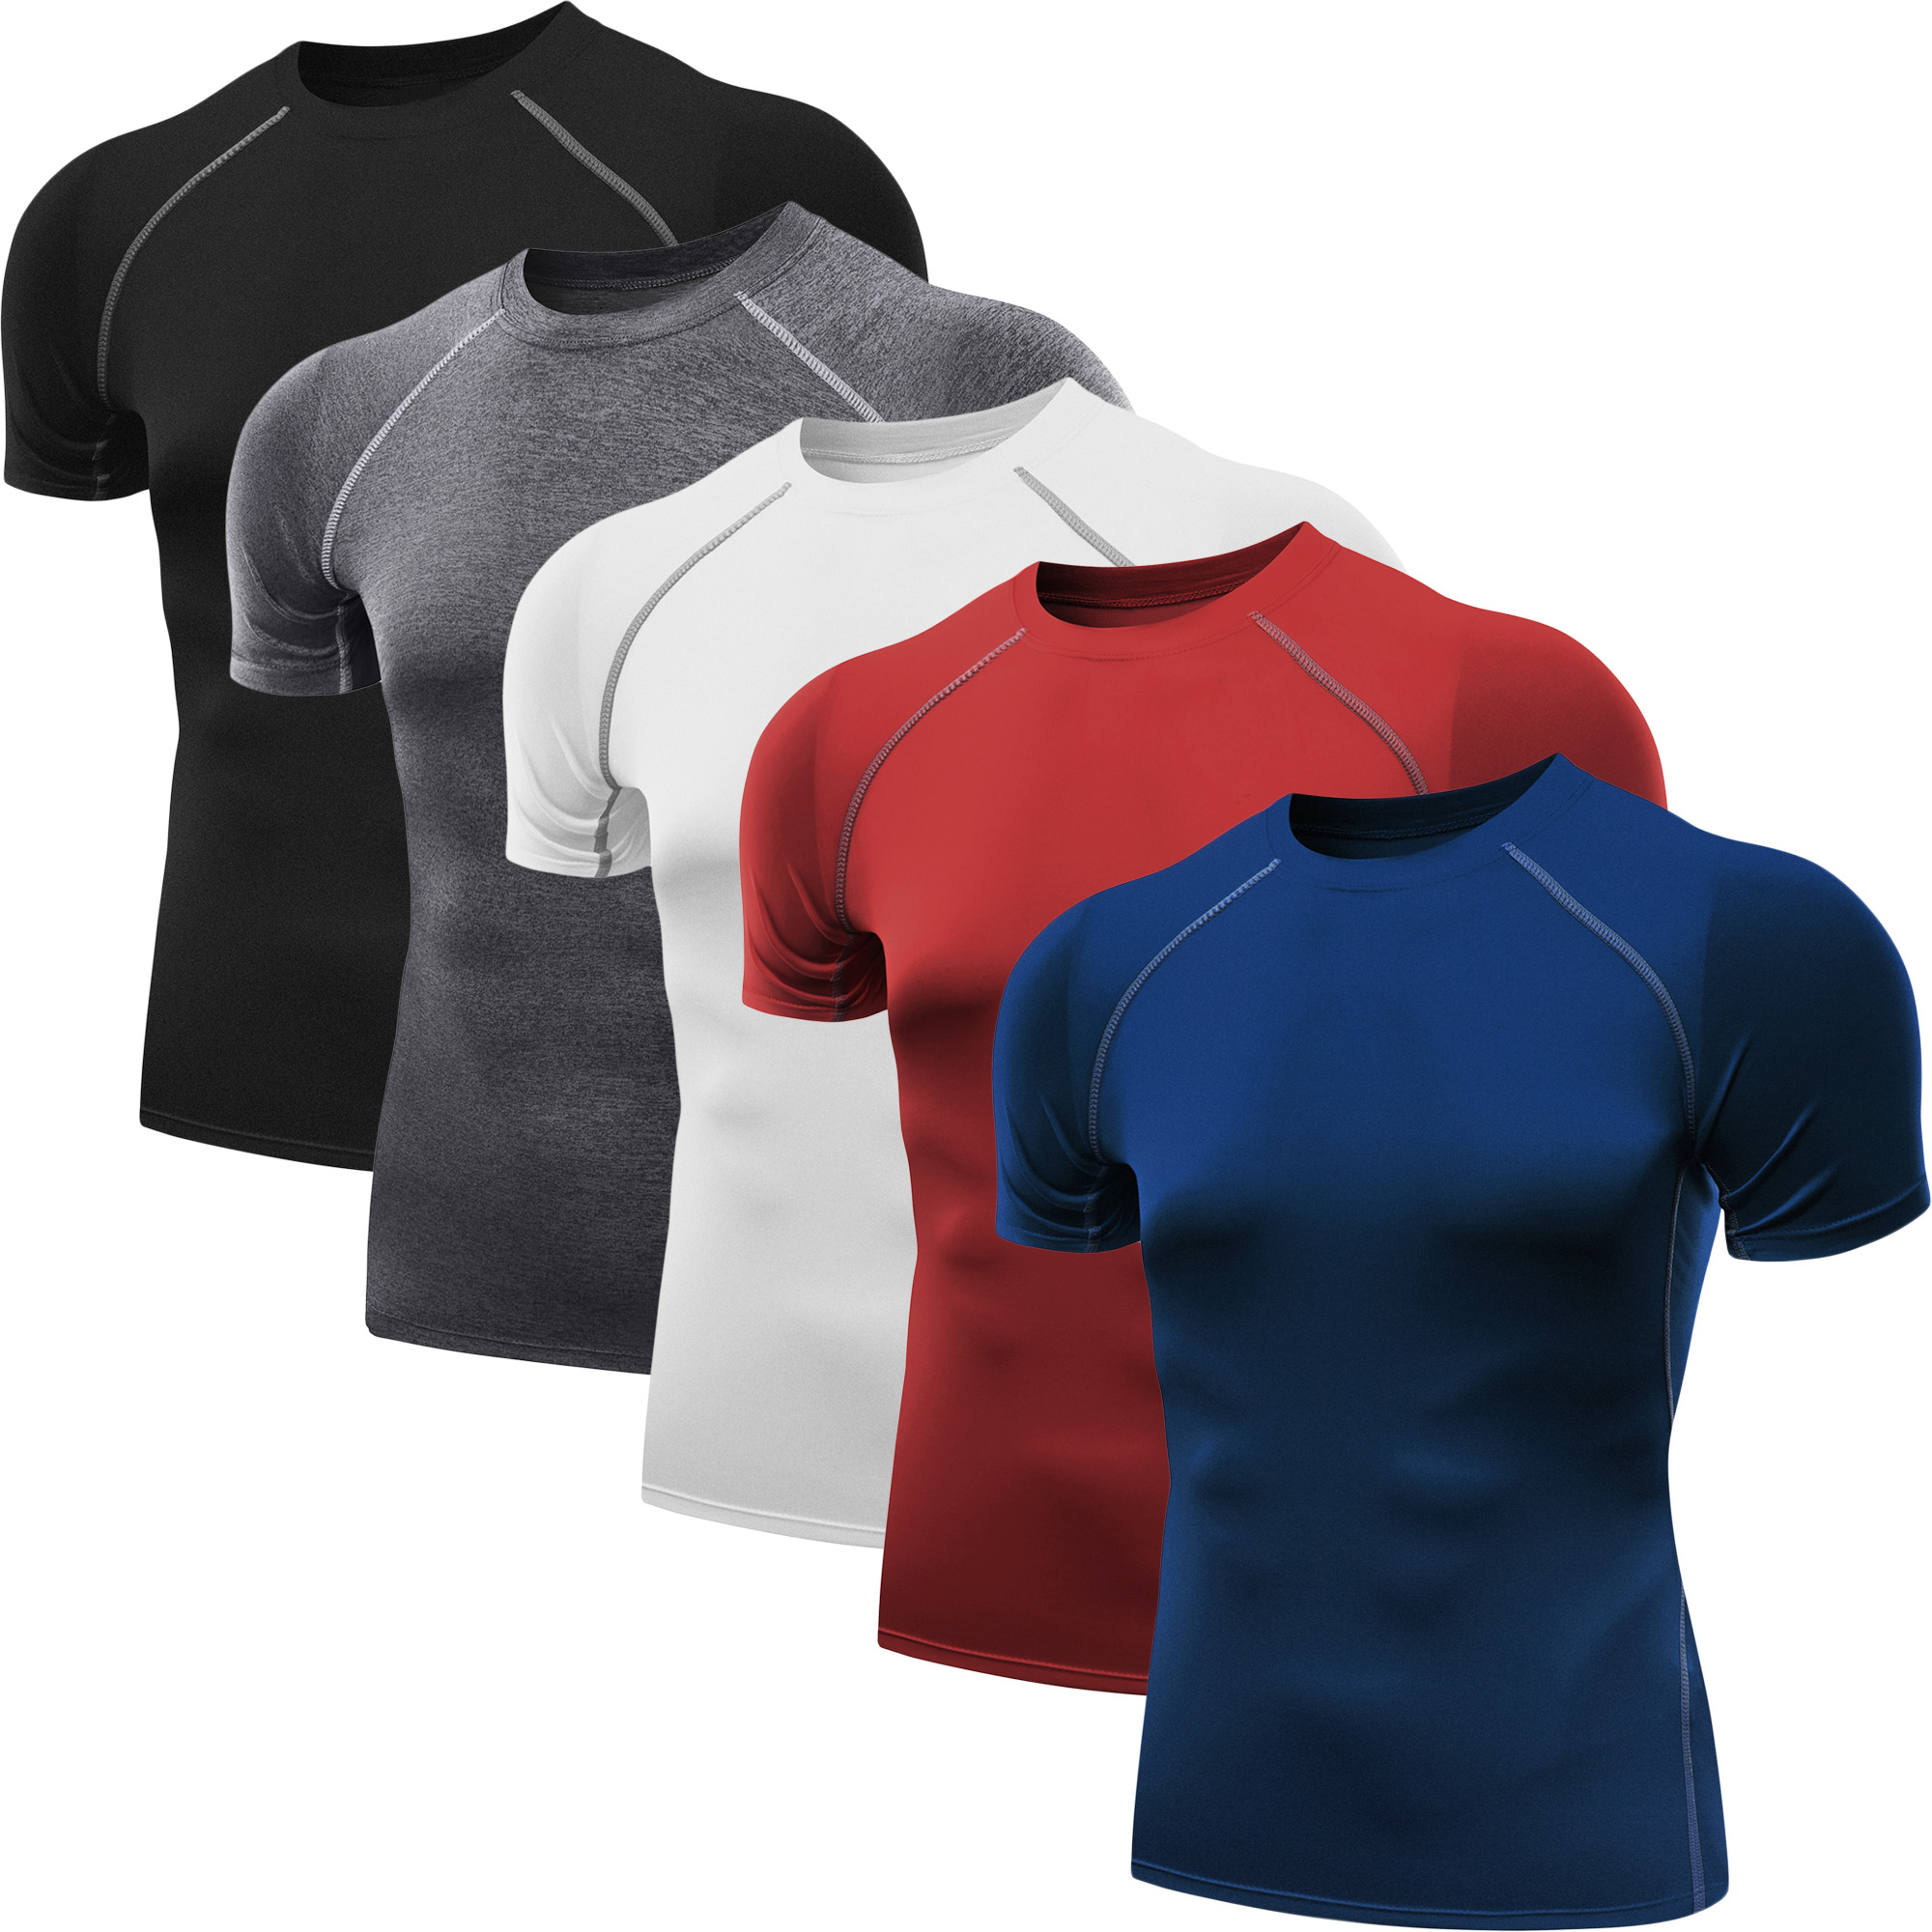 DT0007 Neleus Men's Sport Compression Short-Sleeved Shirts